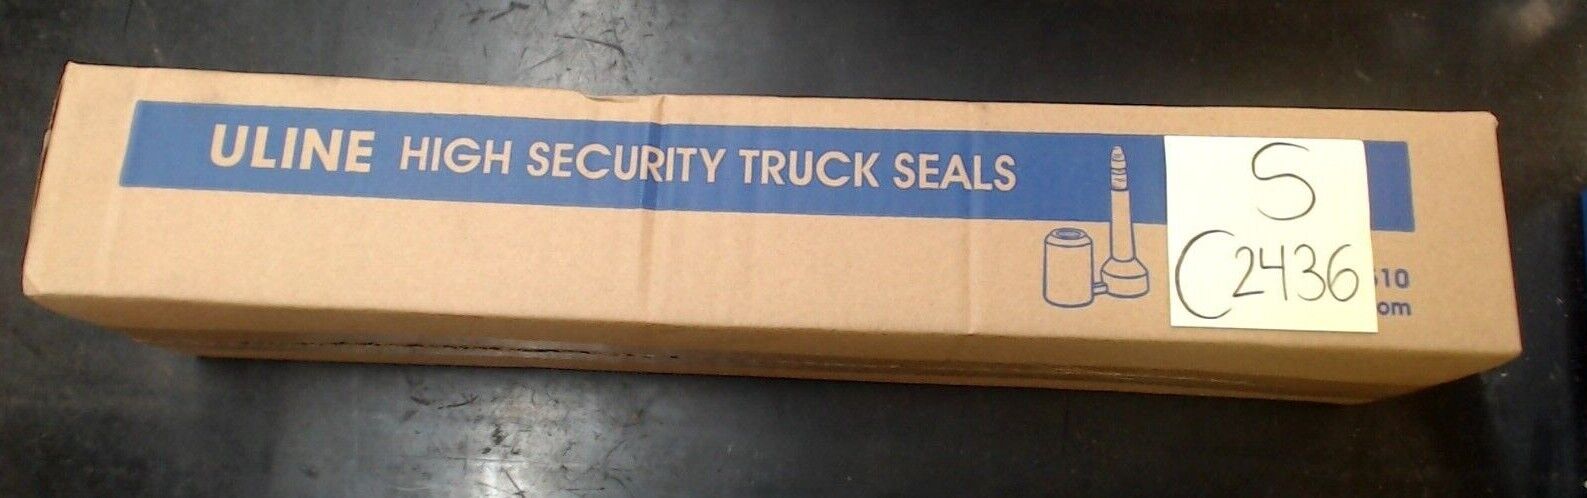 H-435BLU (Unopened) Uline High Security Truck Seals, box of 50